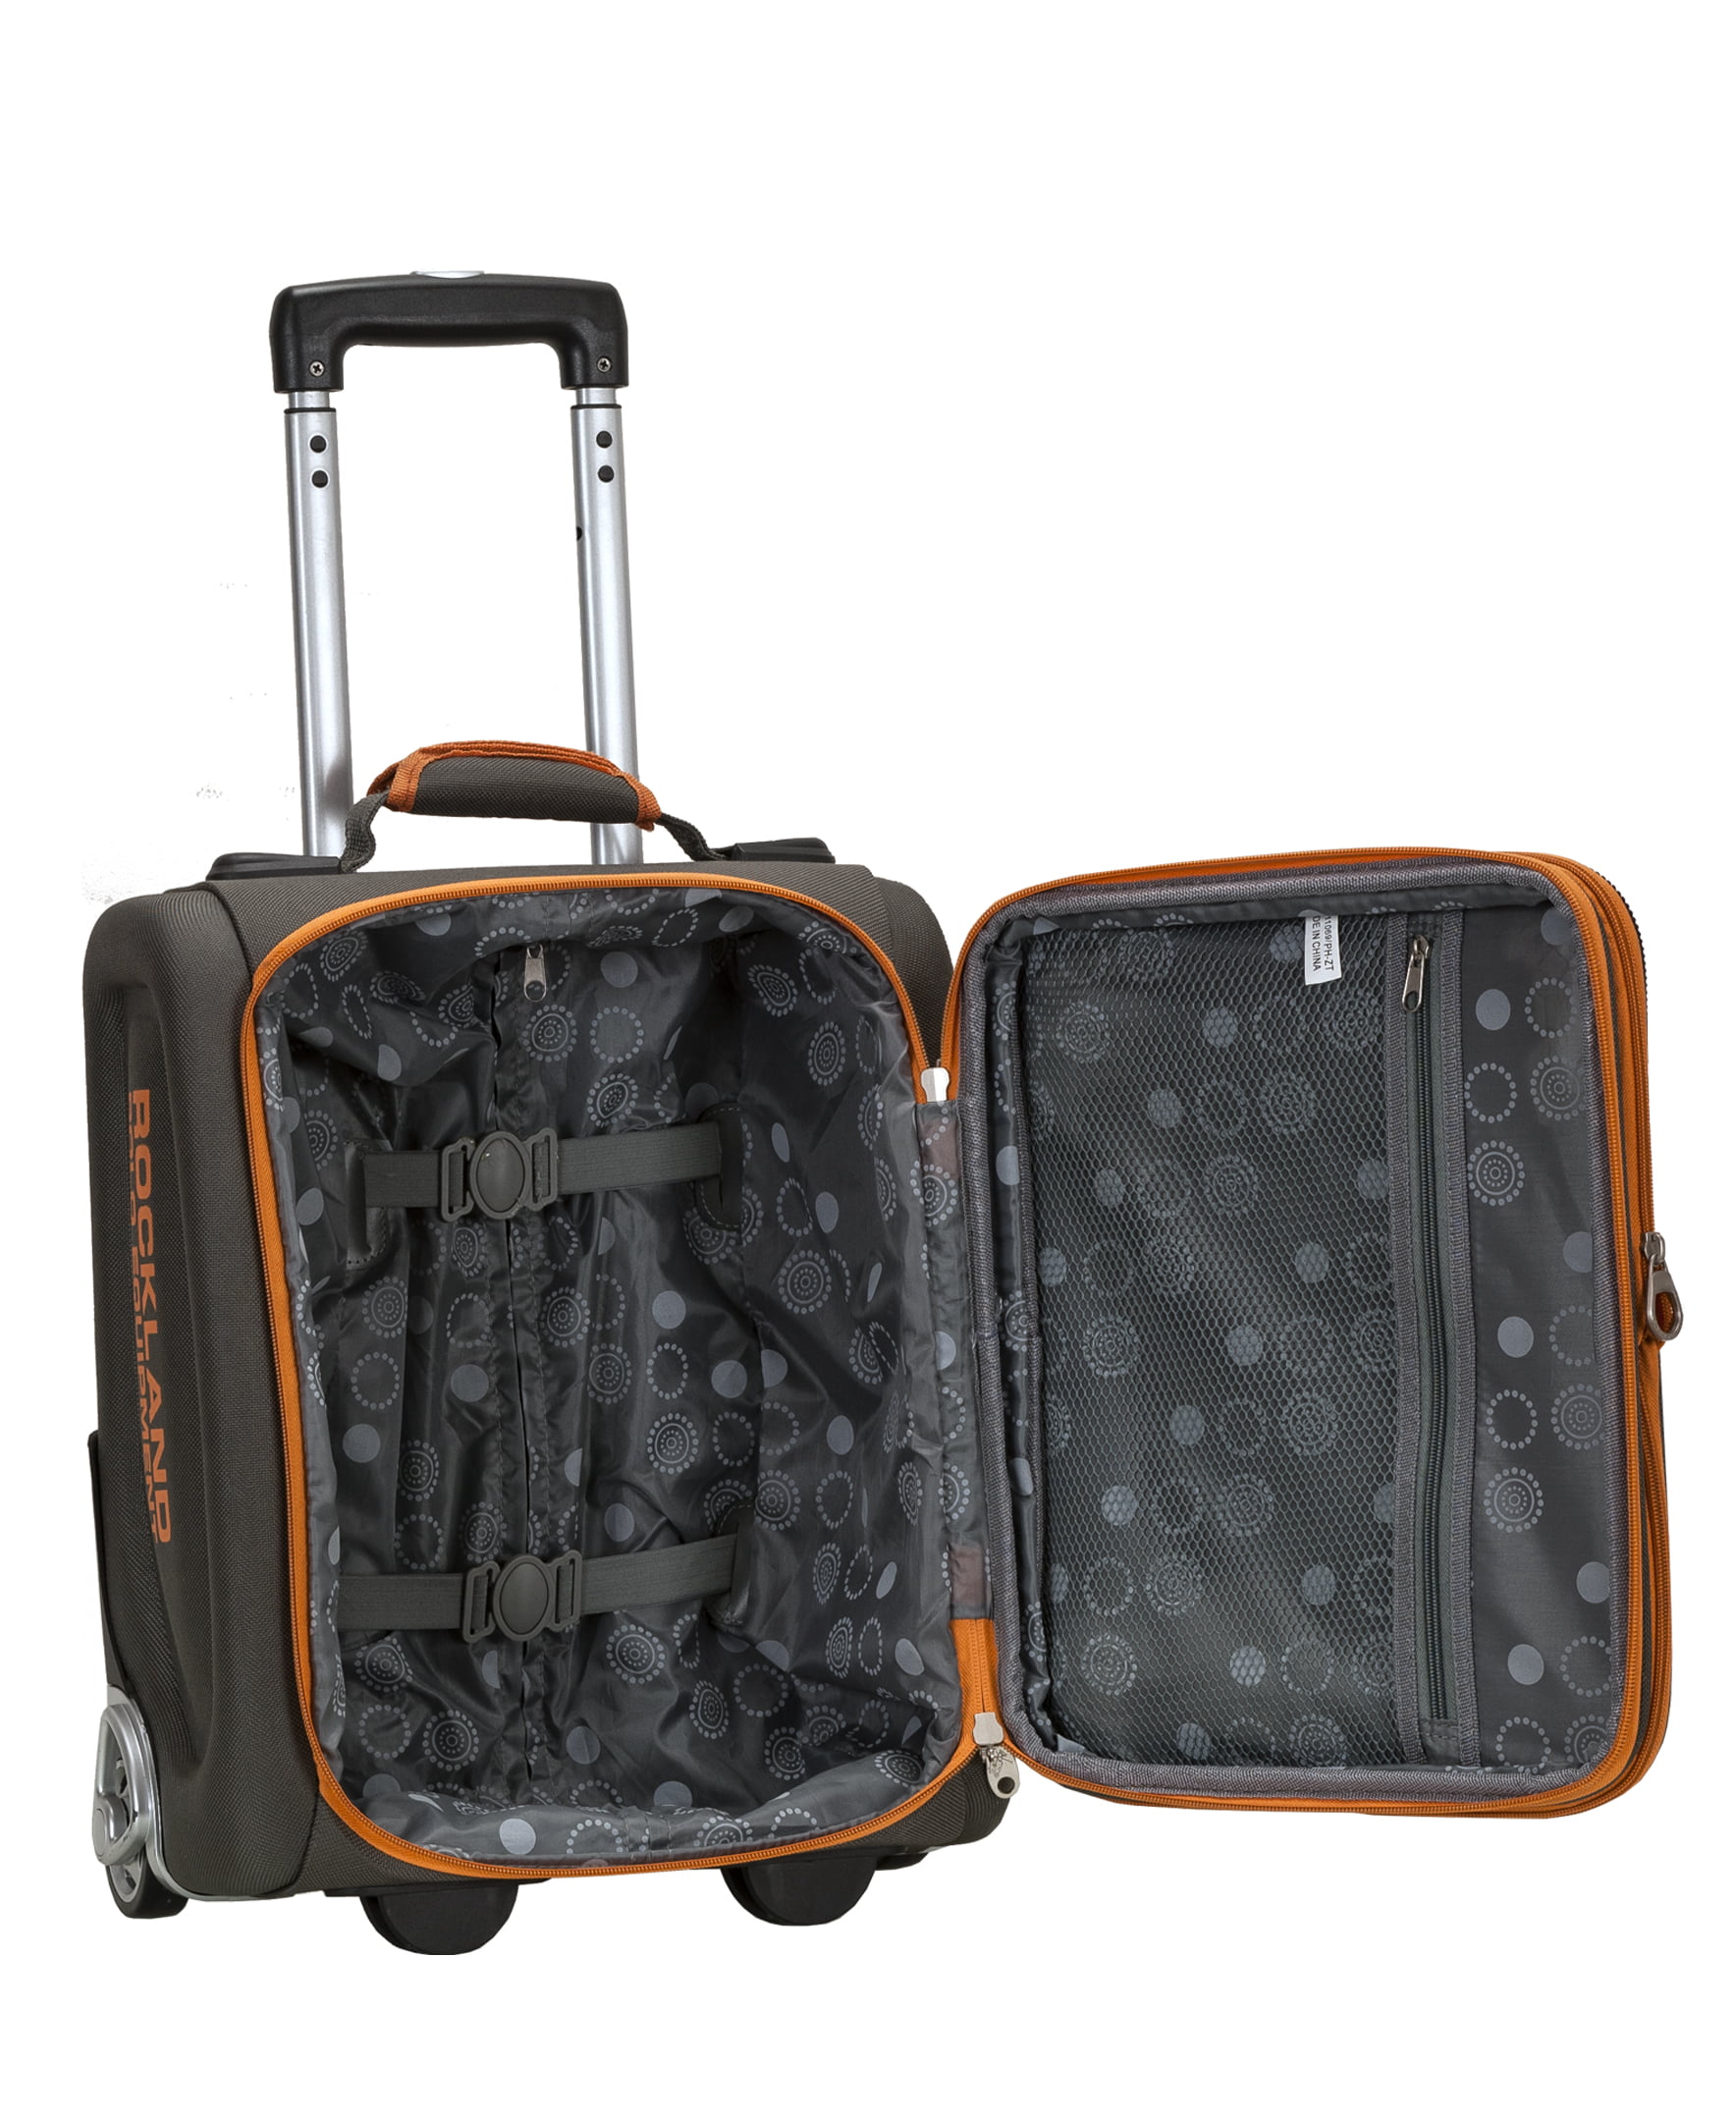 Timberland backpack rucksack LINDENWOOD TRAVEL BACKPACK DARK GREY RRP £125  | eBay